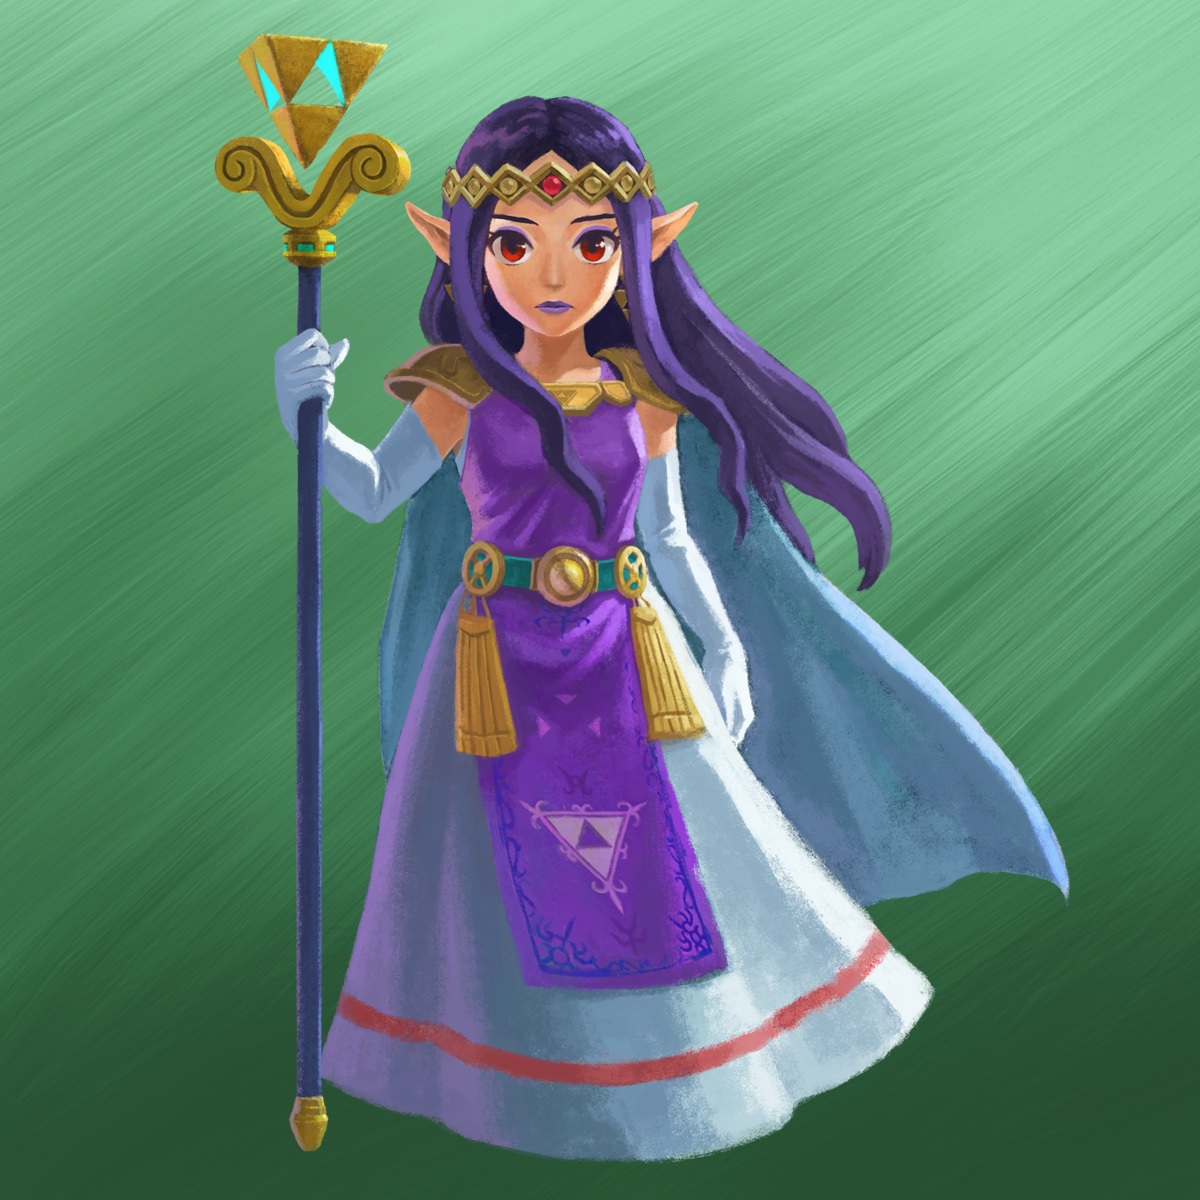 Princess Hilda from the Legend of Zelda Series